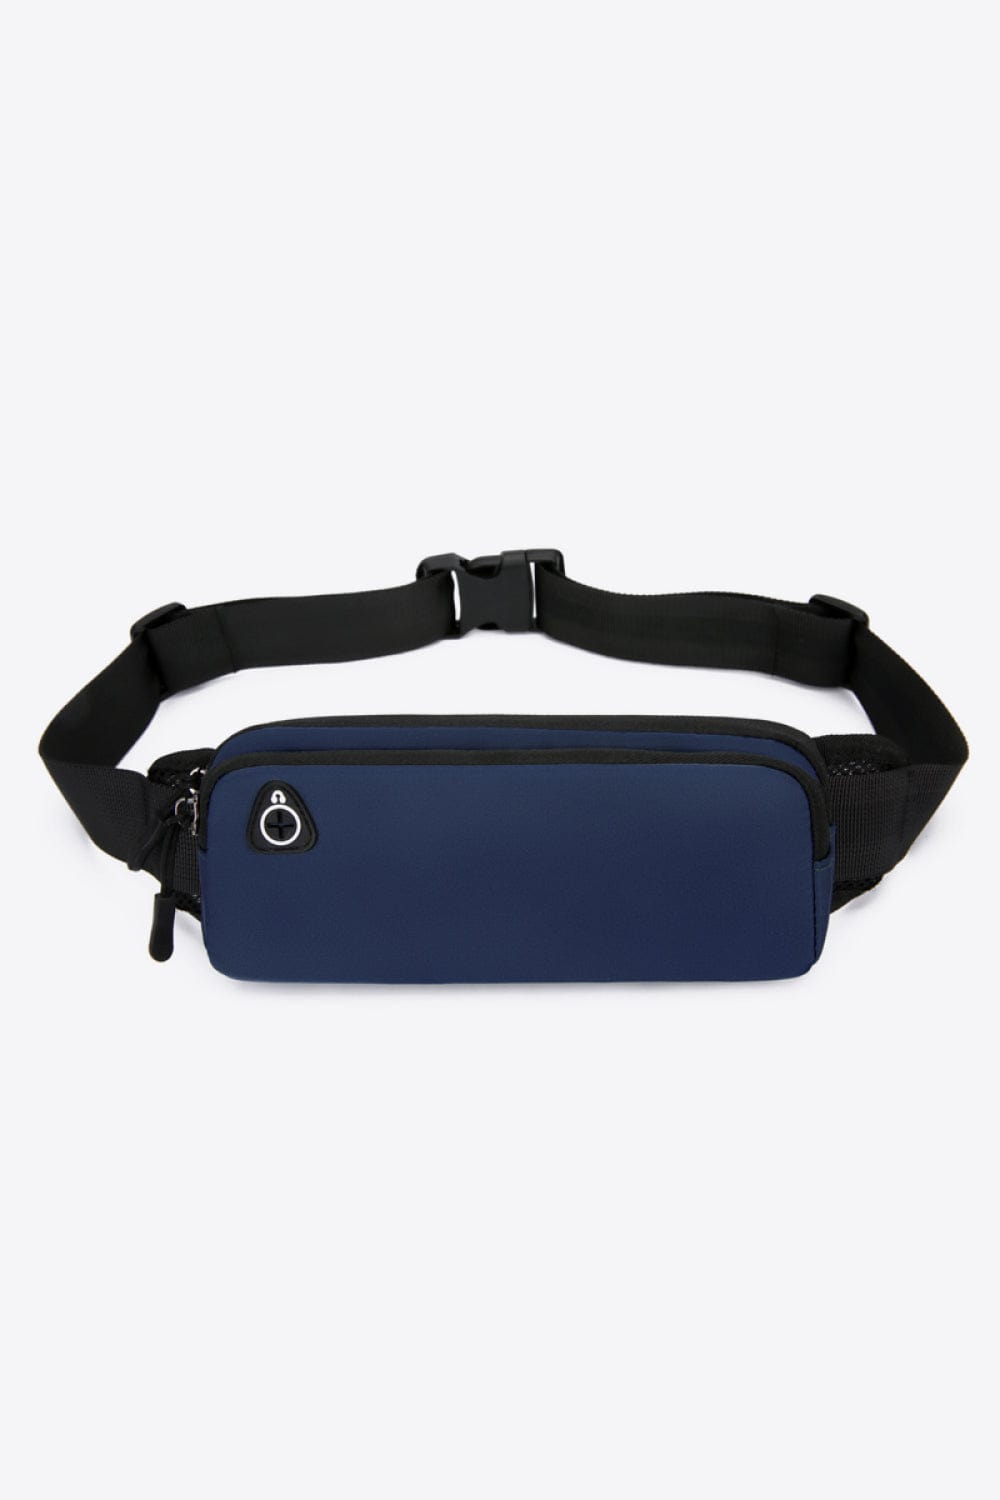 The802Gypsy Handbags, Wallets & Cases Navy / One Size GYPSY-Mini Sling Bag